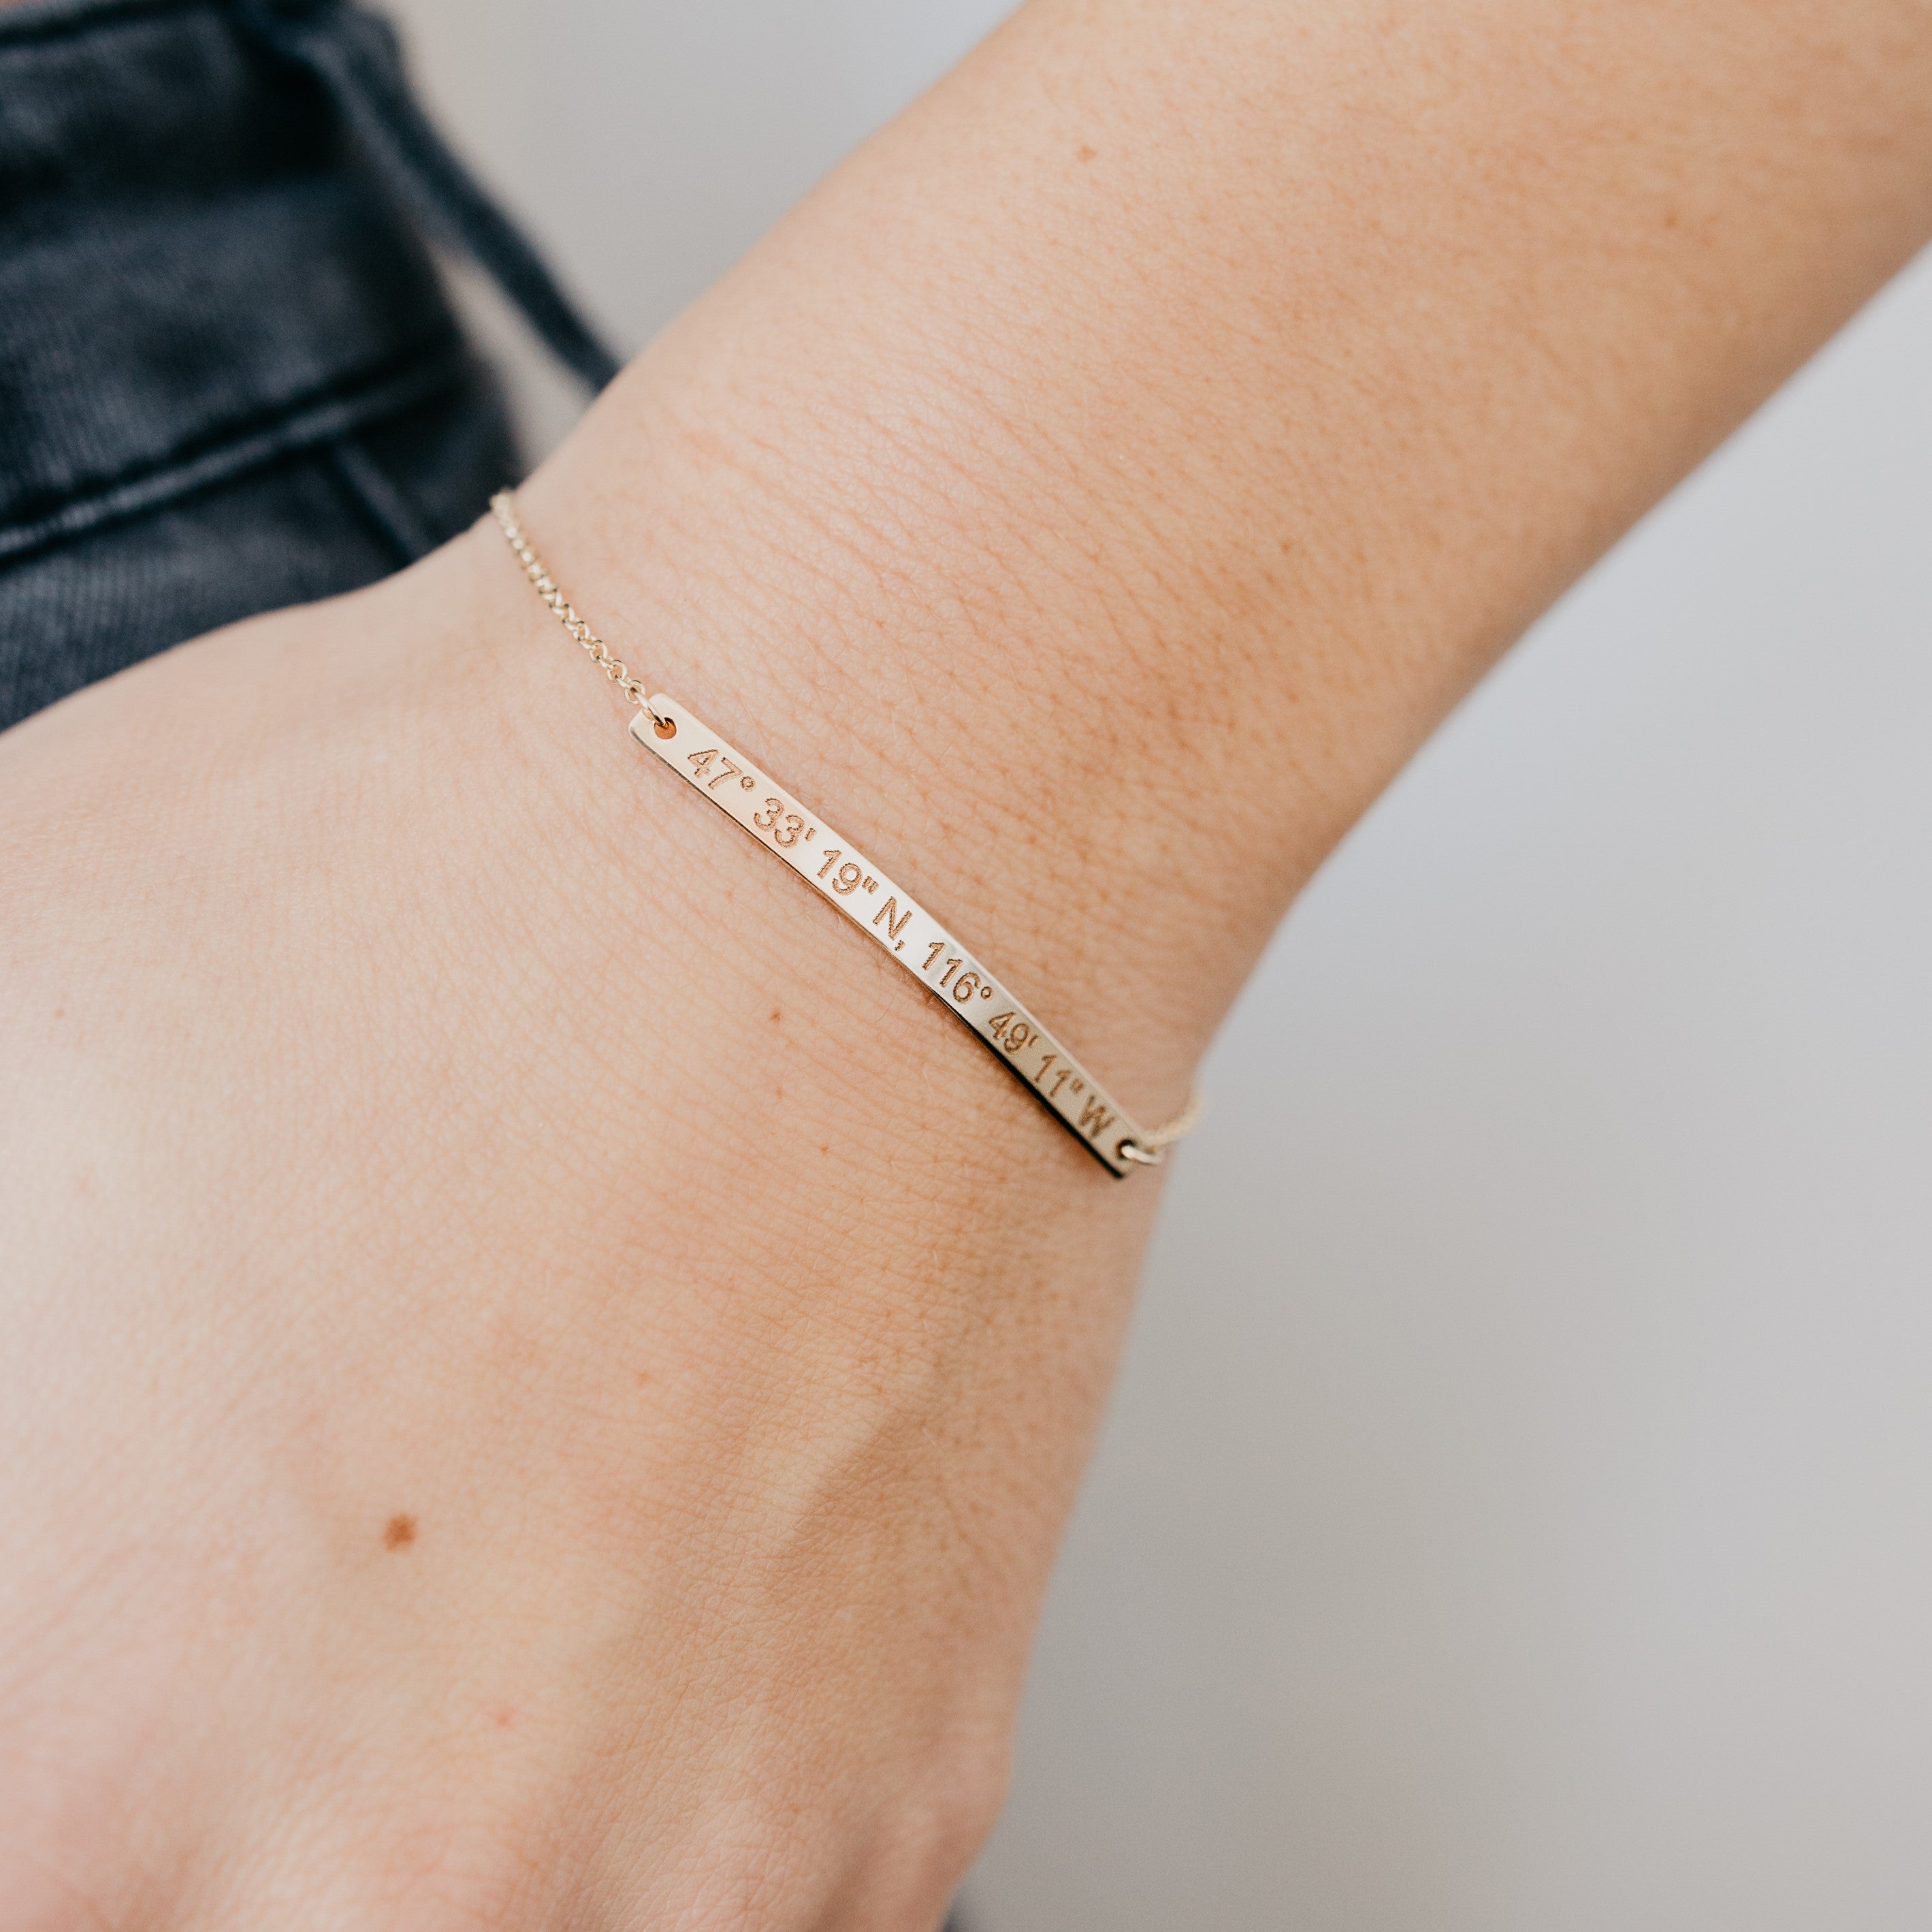 dainty coordinates bar bracelet by Lat & Lo in 14k gold-filled on model's wrist